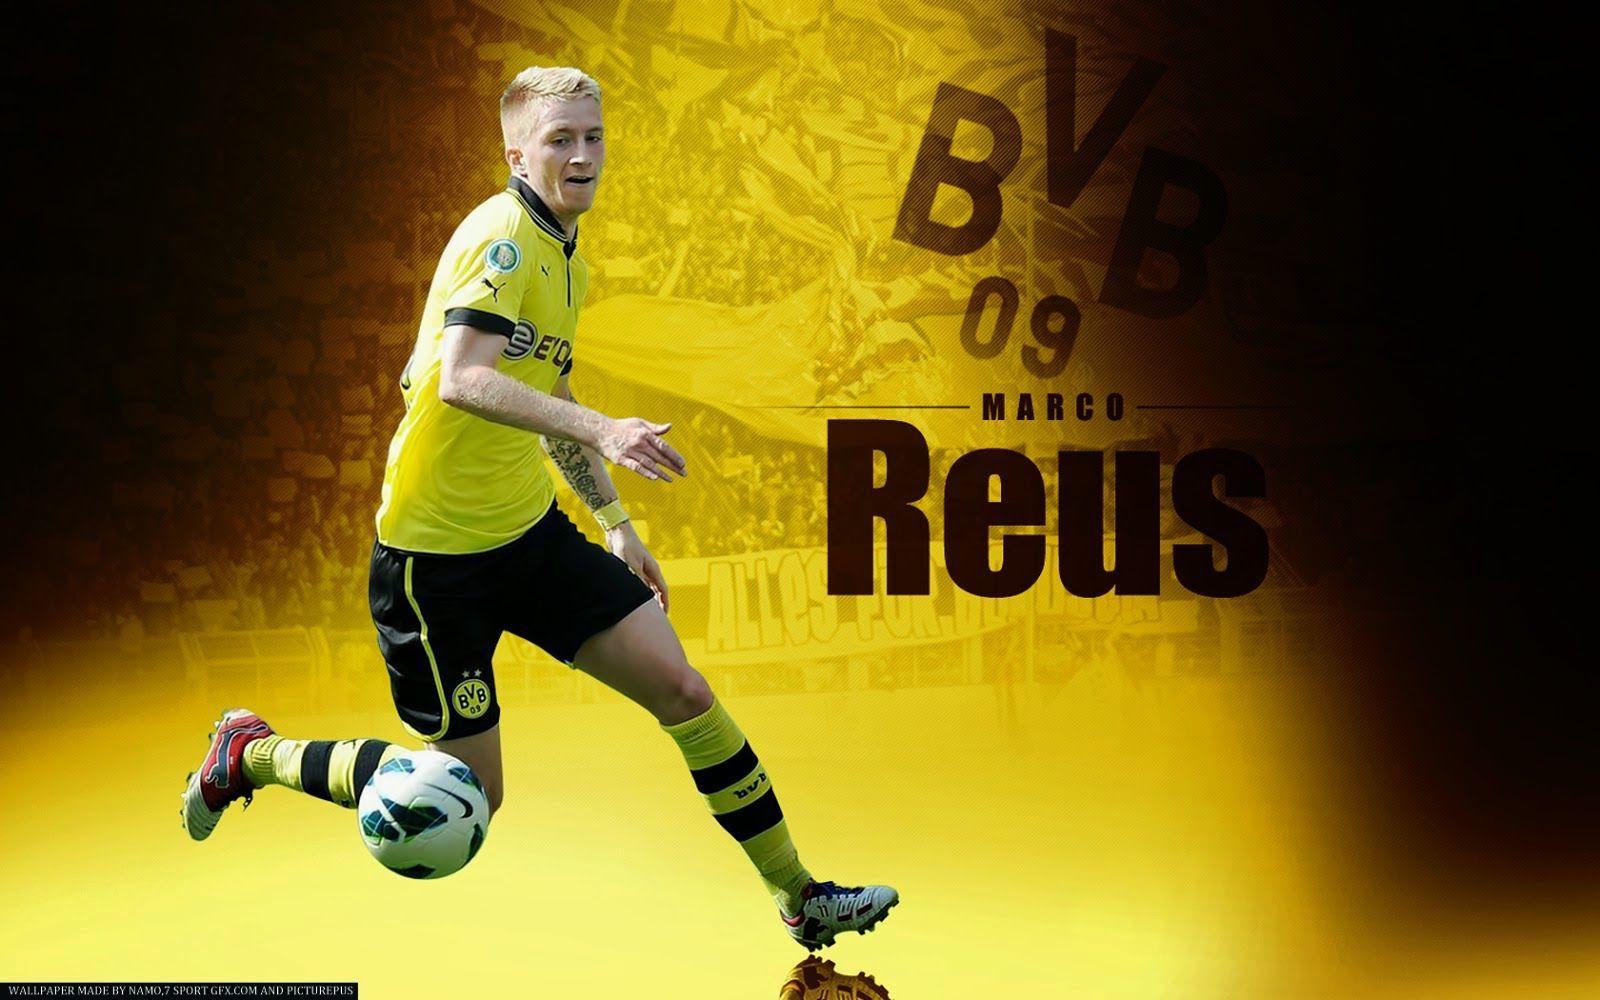 Marco Reus Football Player Wallpapers